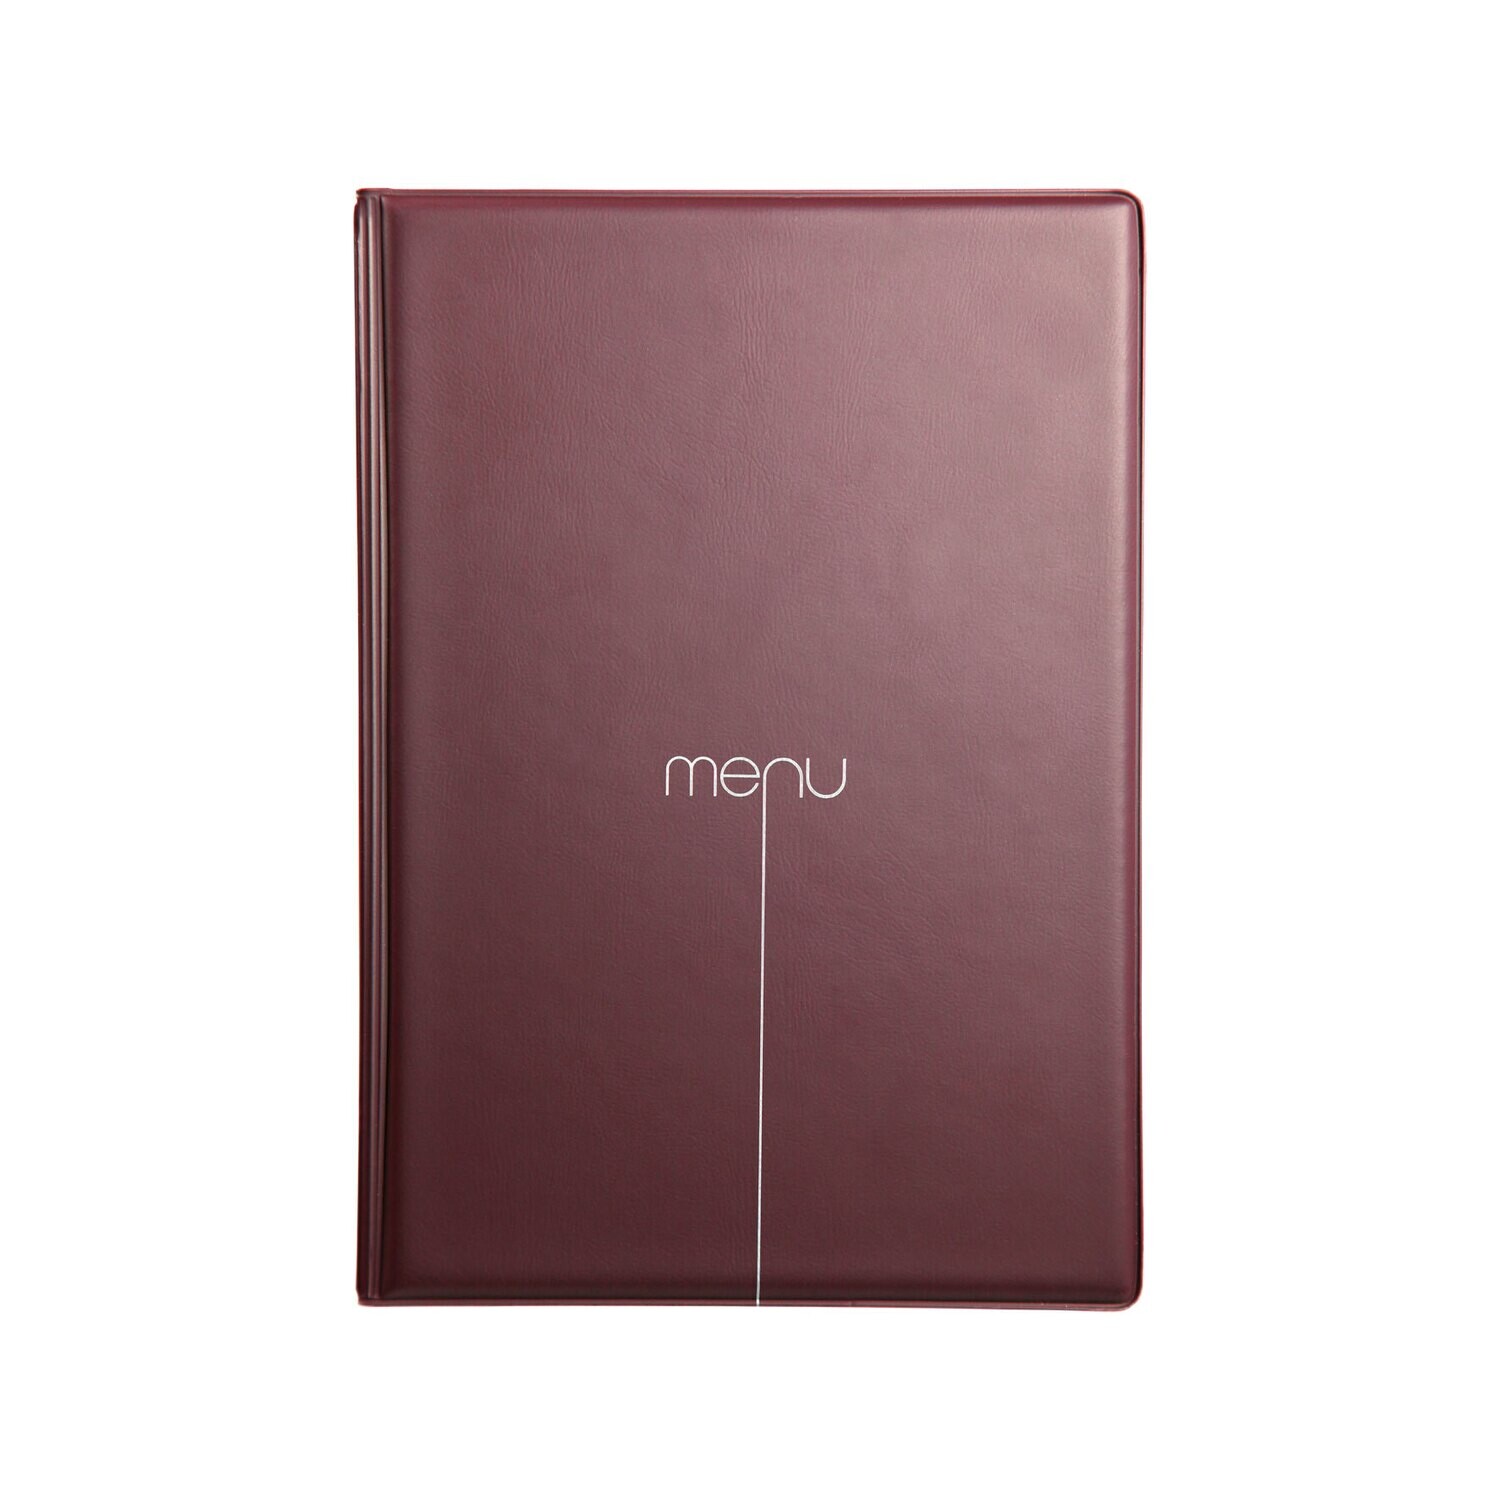 DAG Style - Porta Menu RISTO A5 scritta menu BORDEAUX 16,5x23,8 cm